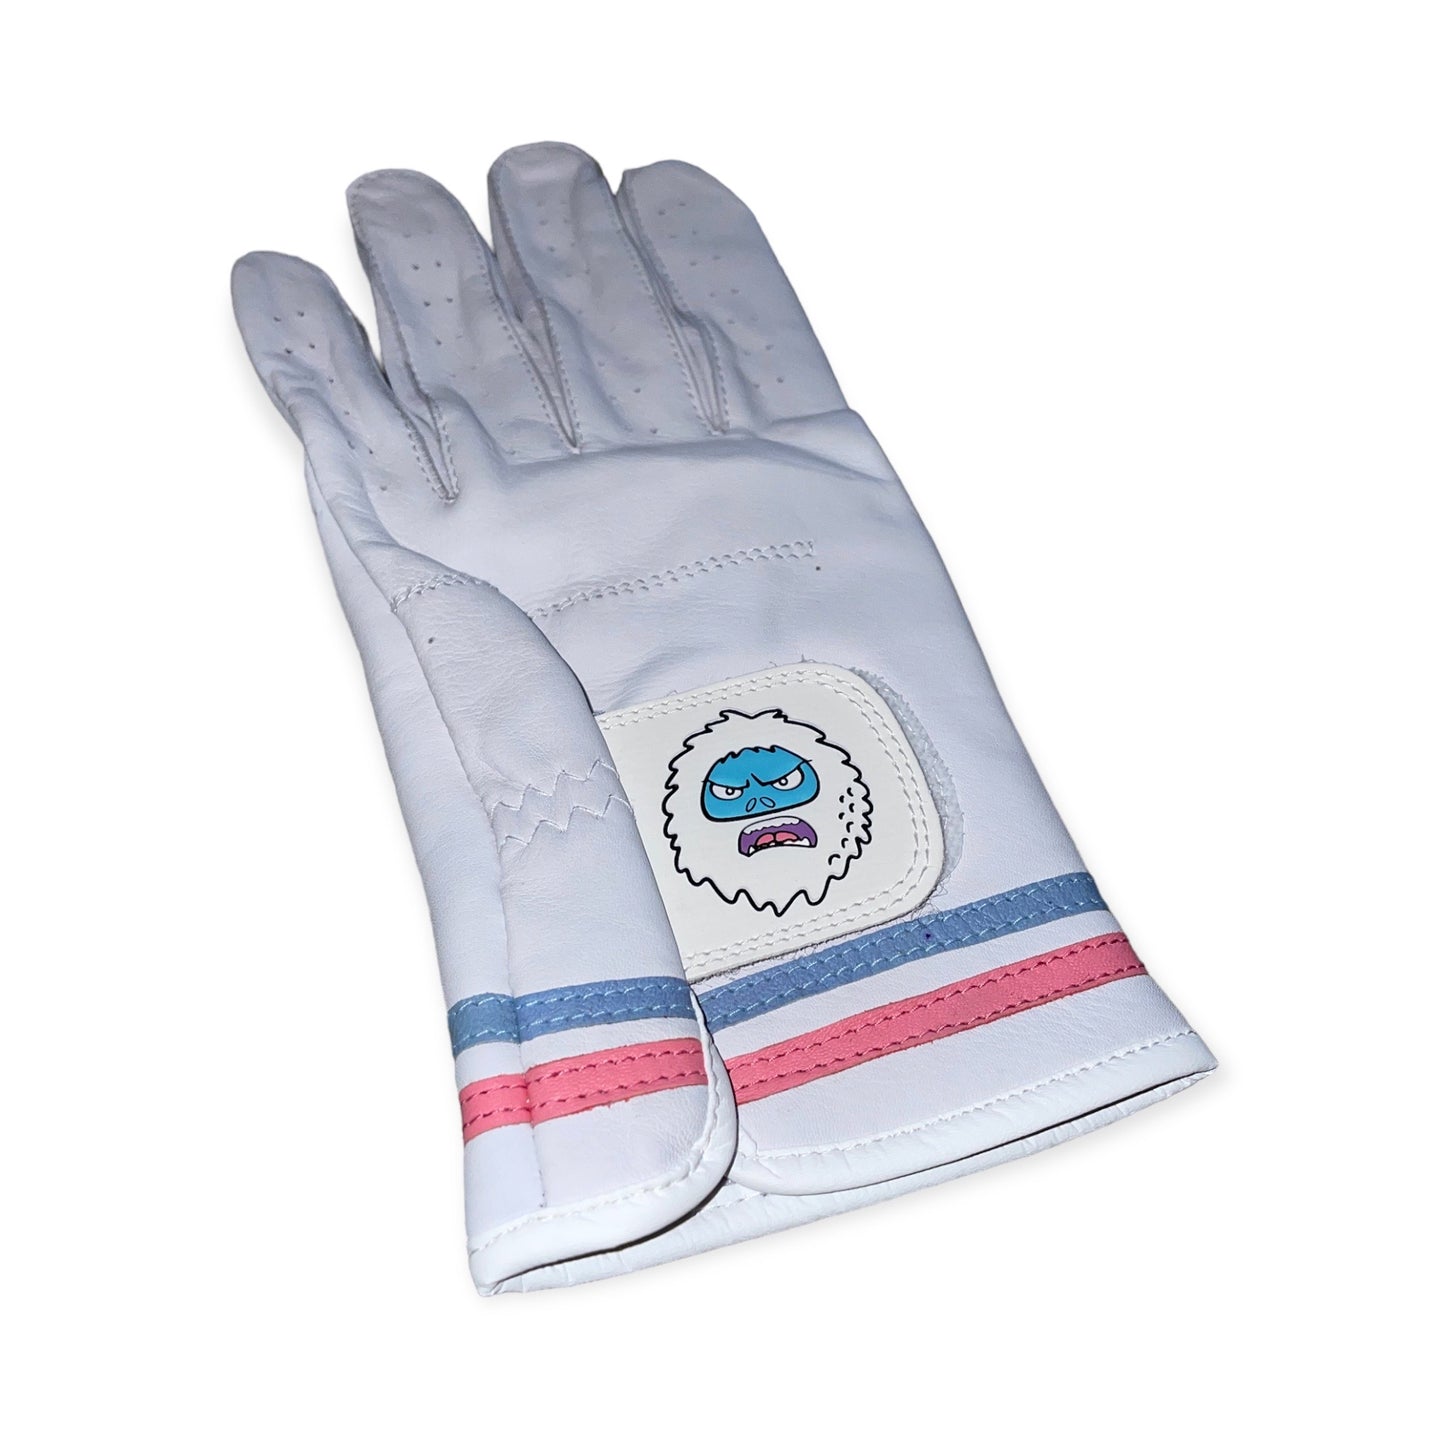 White Logo Leather glove